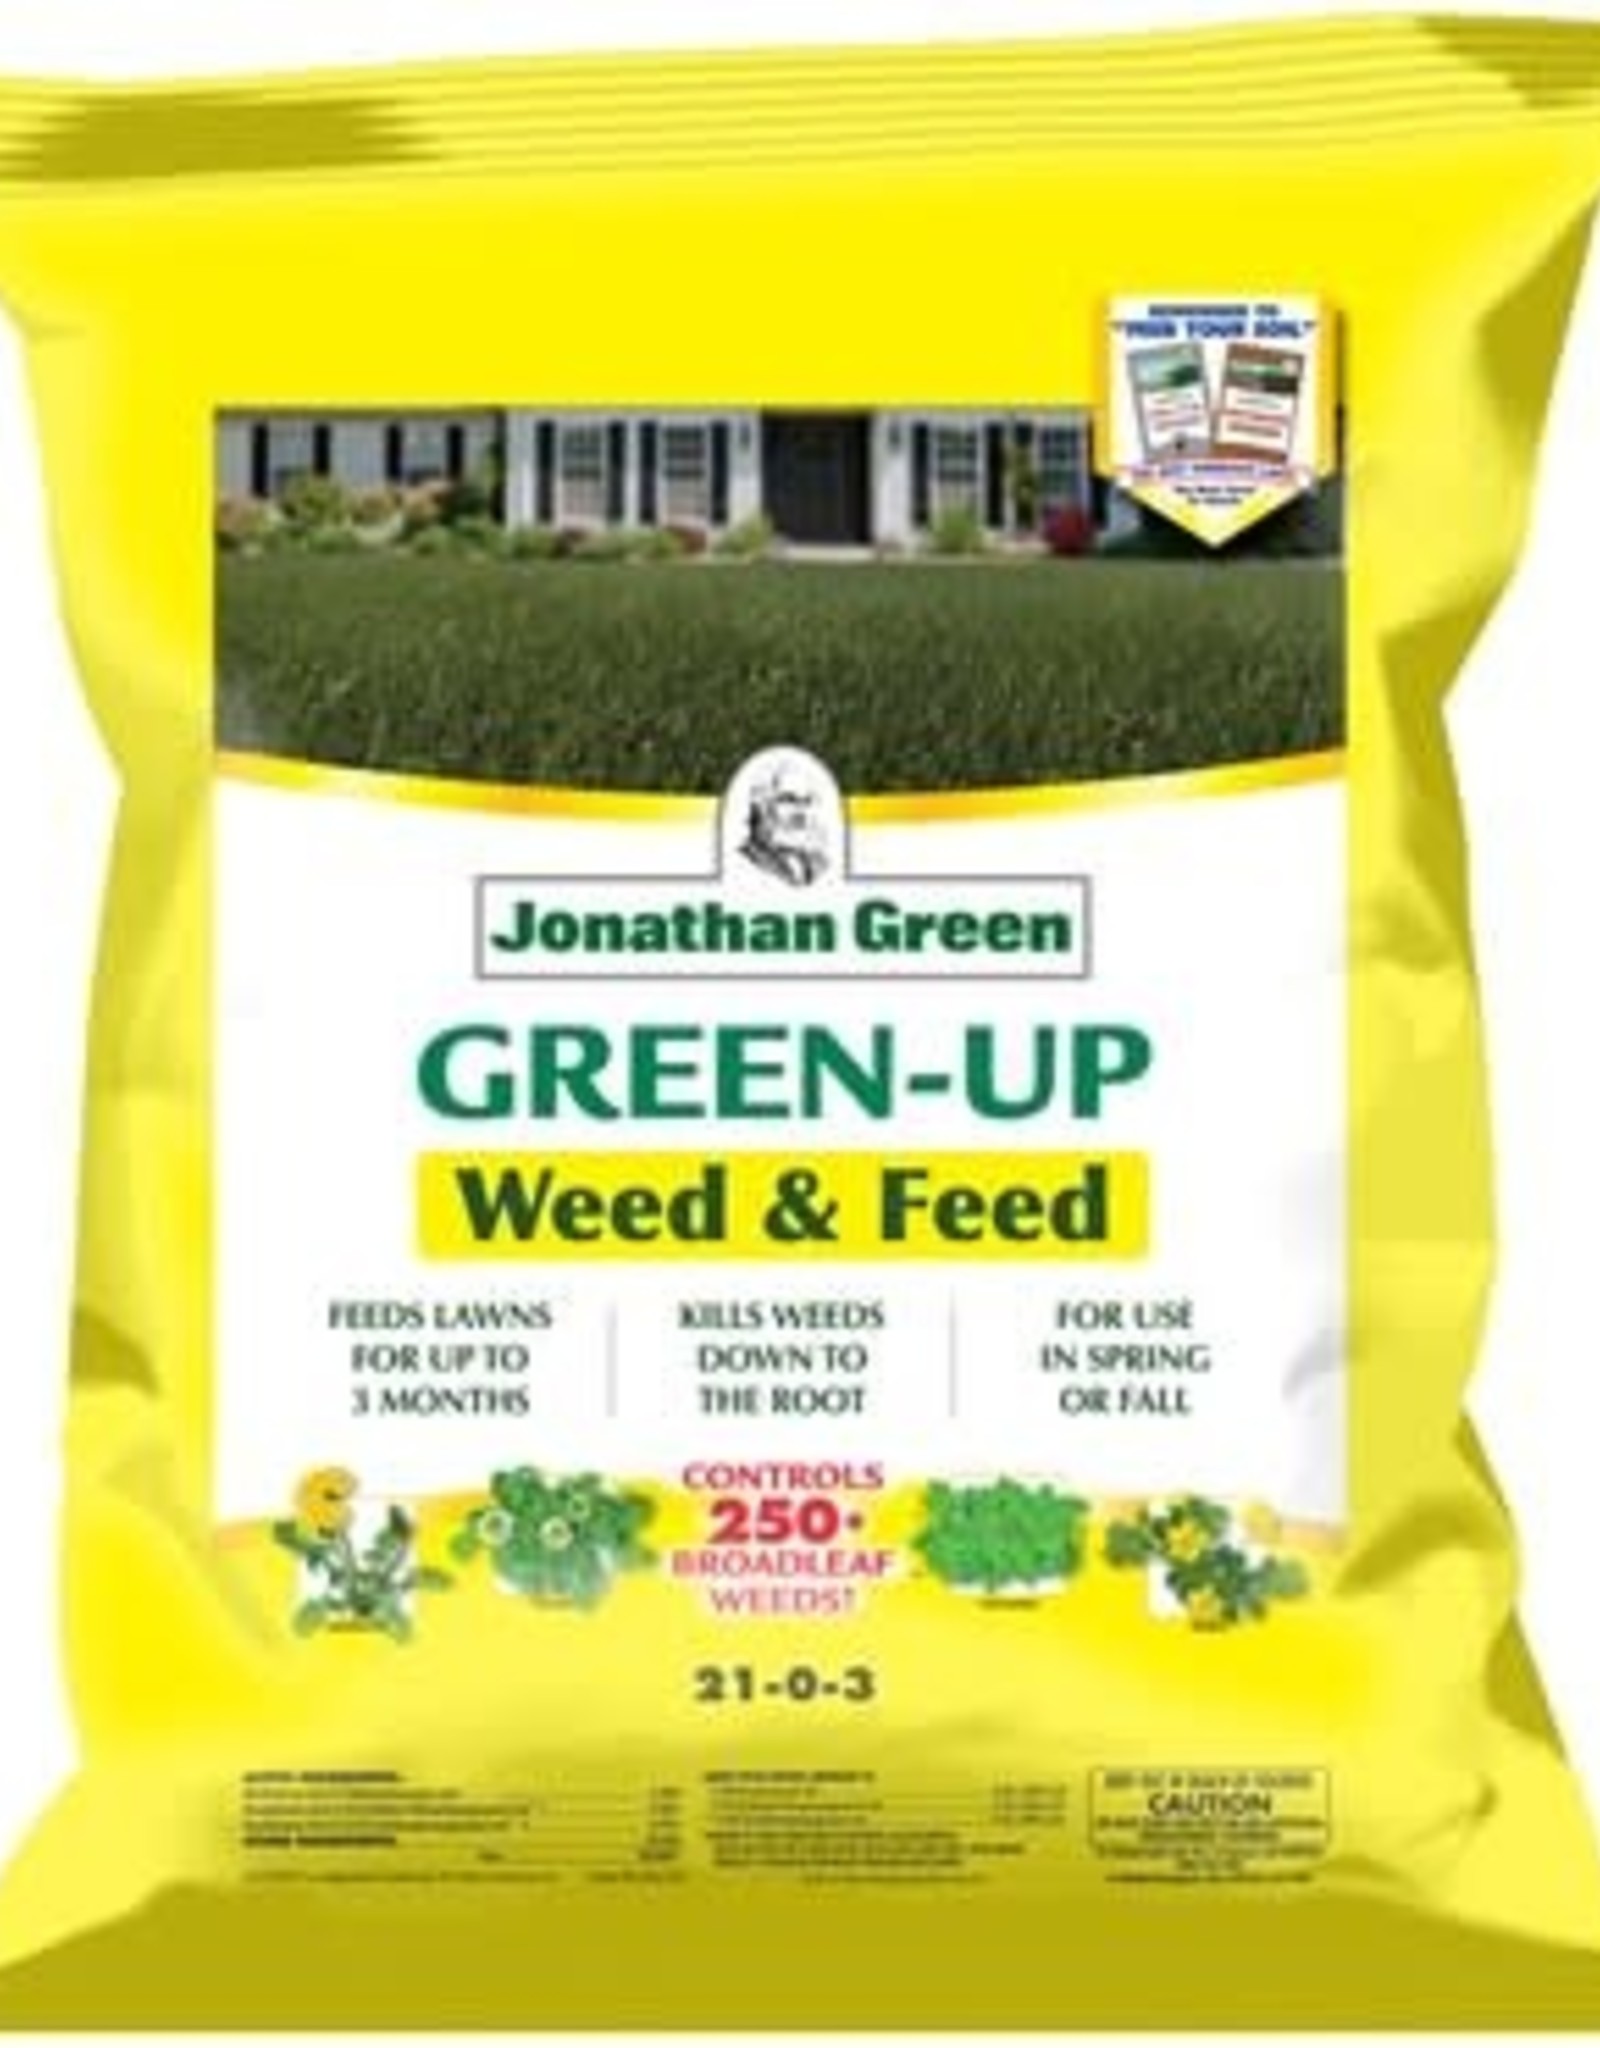 Jonathan Green Green-Up Weed & Feed 15lb.